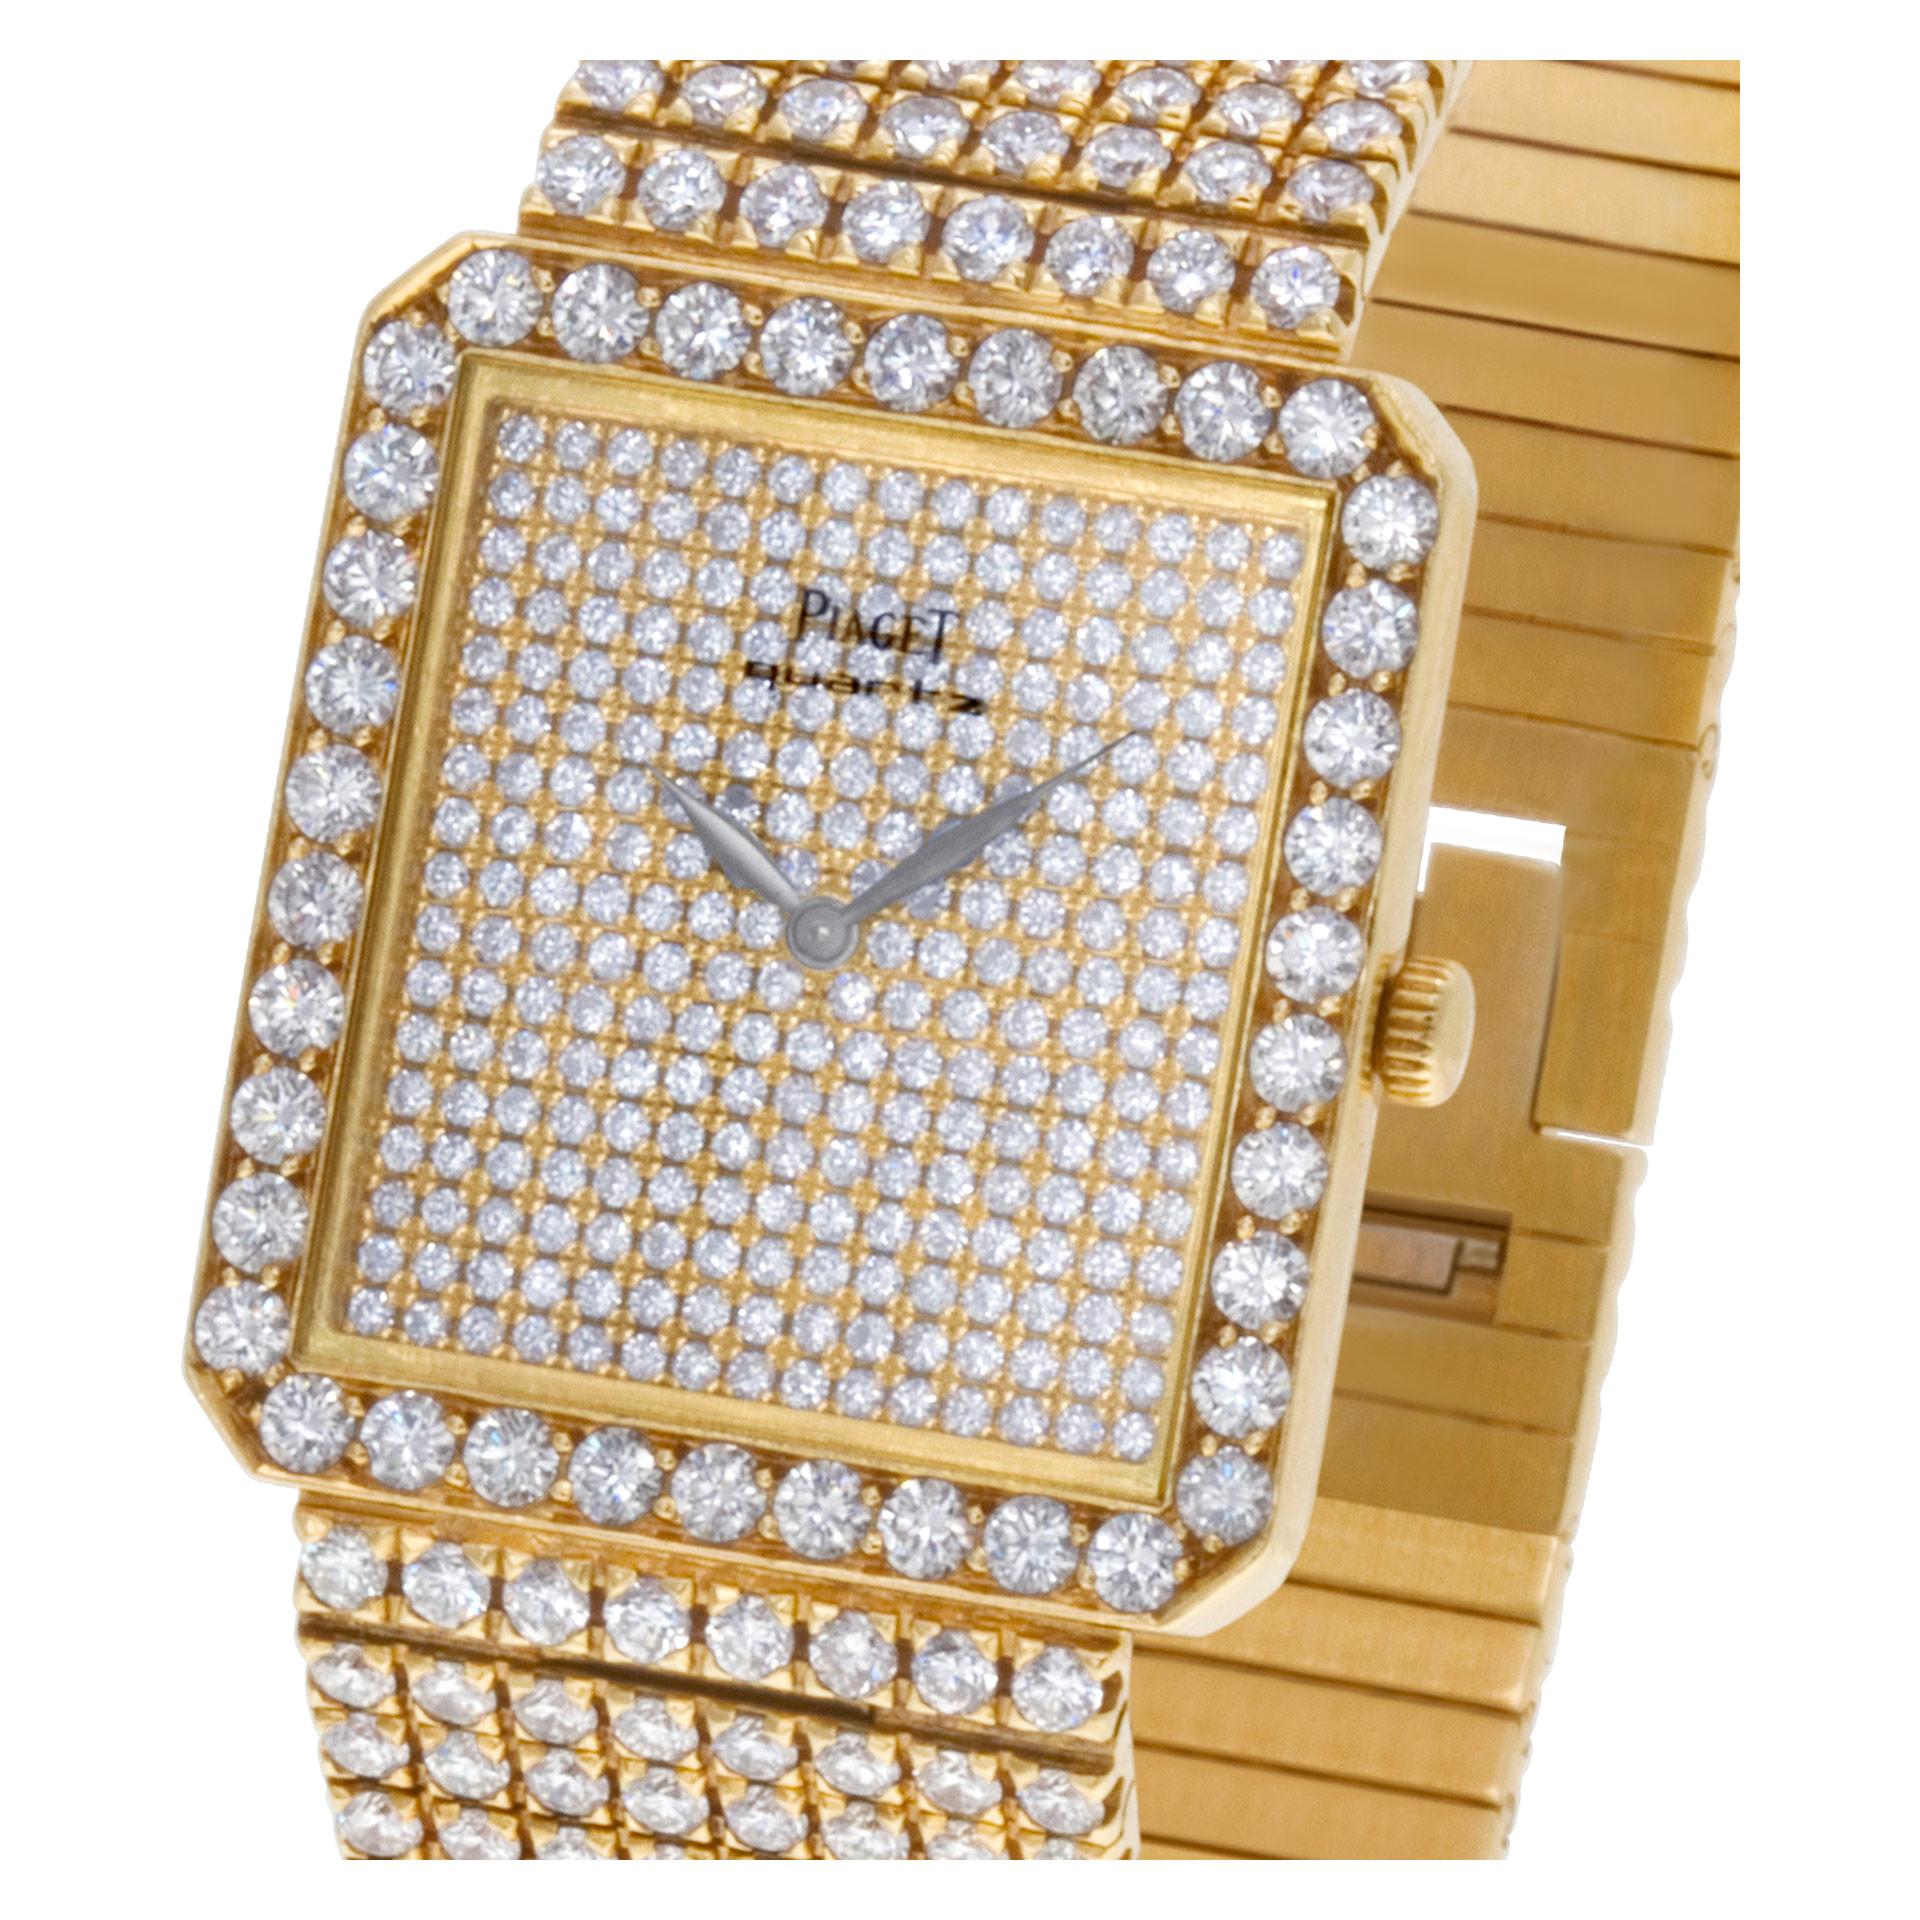 Round Cut Piaget Classic 81541c626 18k with Original Pave Diamonds Quartz Watch